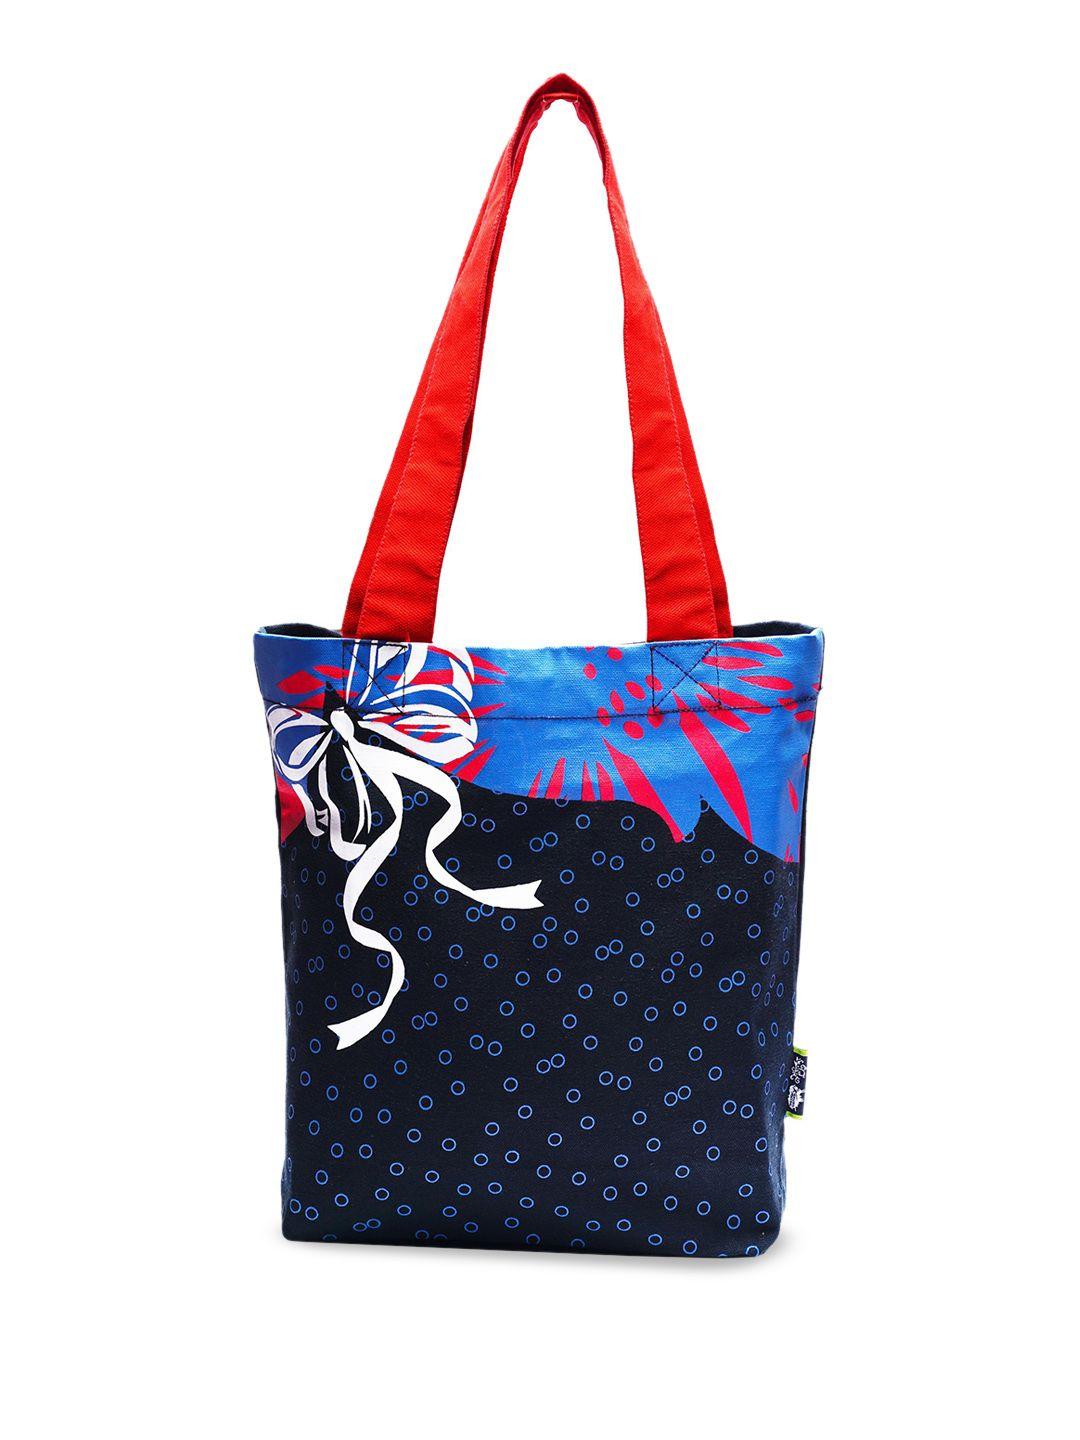 kanvas katha navy blue structured tote bag